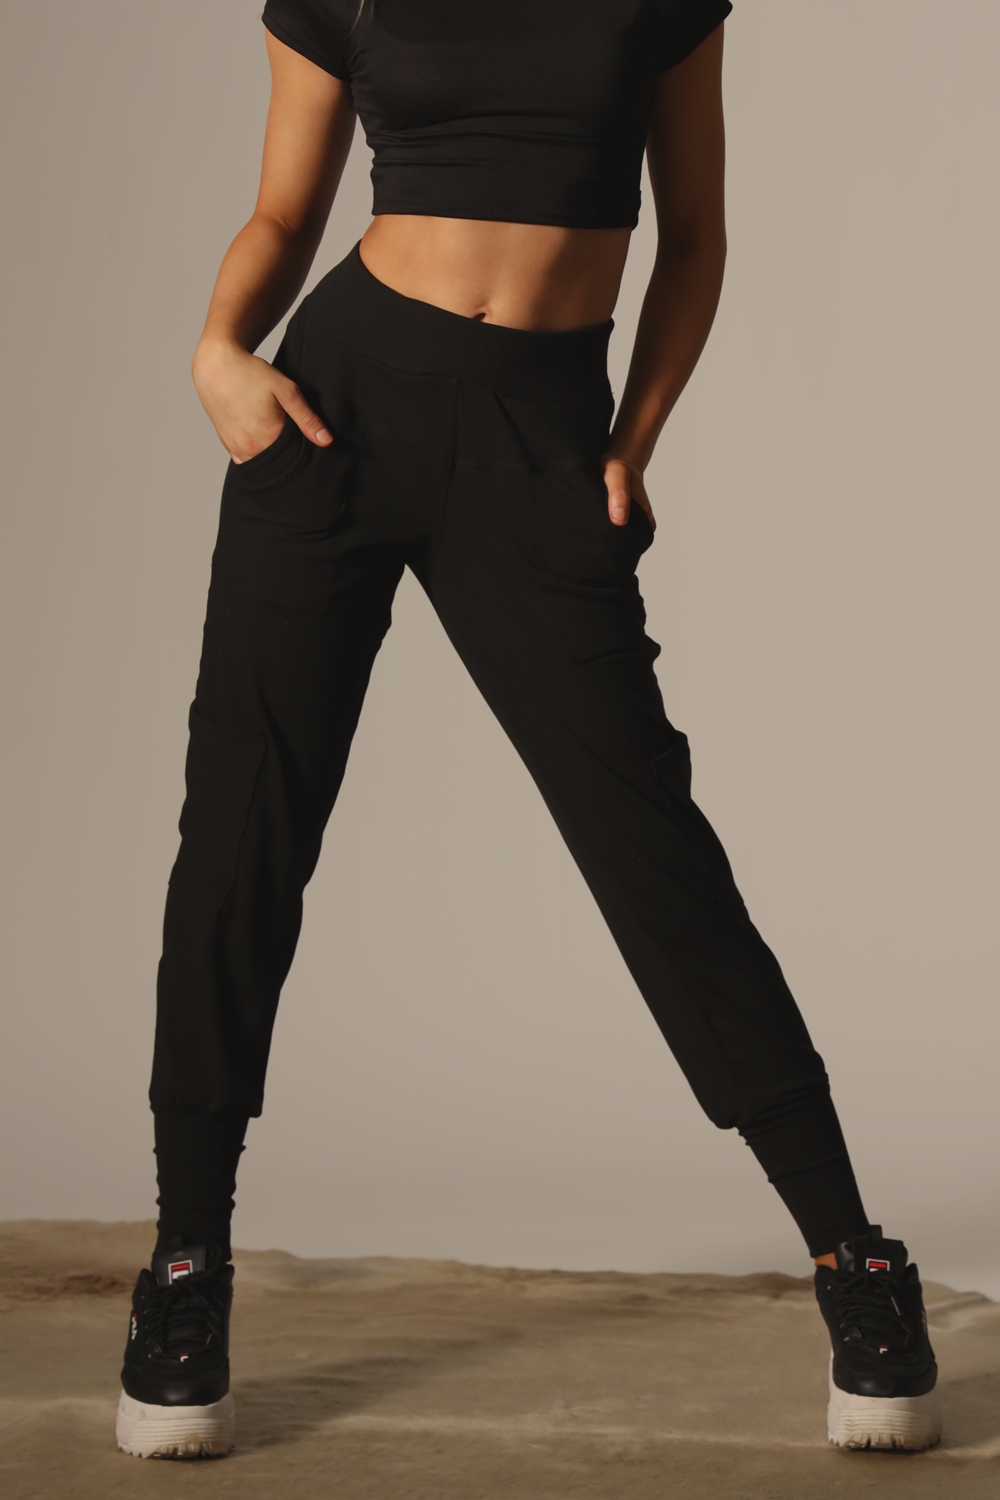 Black Fold Over Yoga Pants With Custom Gold Glitter KICKLINE Wording .  KICKLINE Apparel . Dance Team Apparel . KICKLINE Yoga Pants 